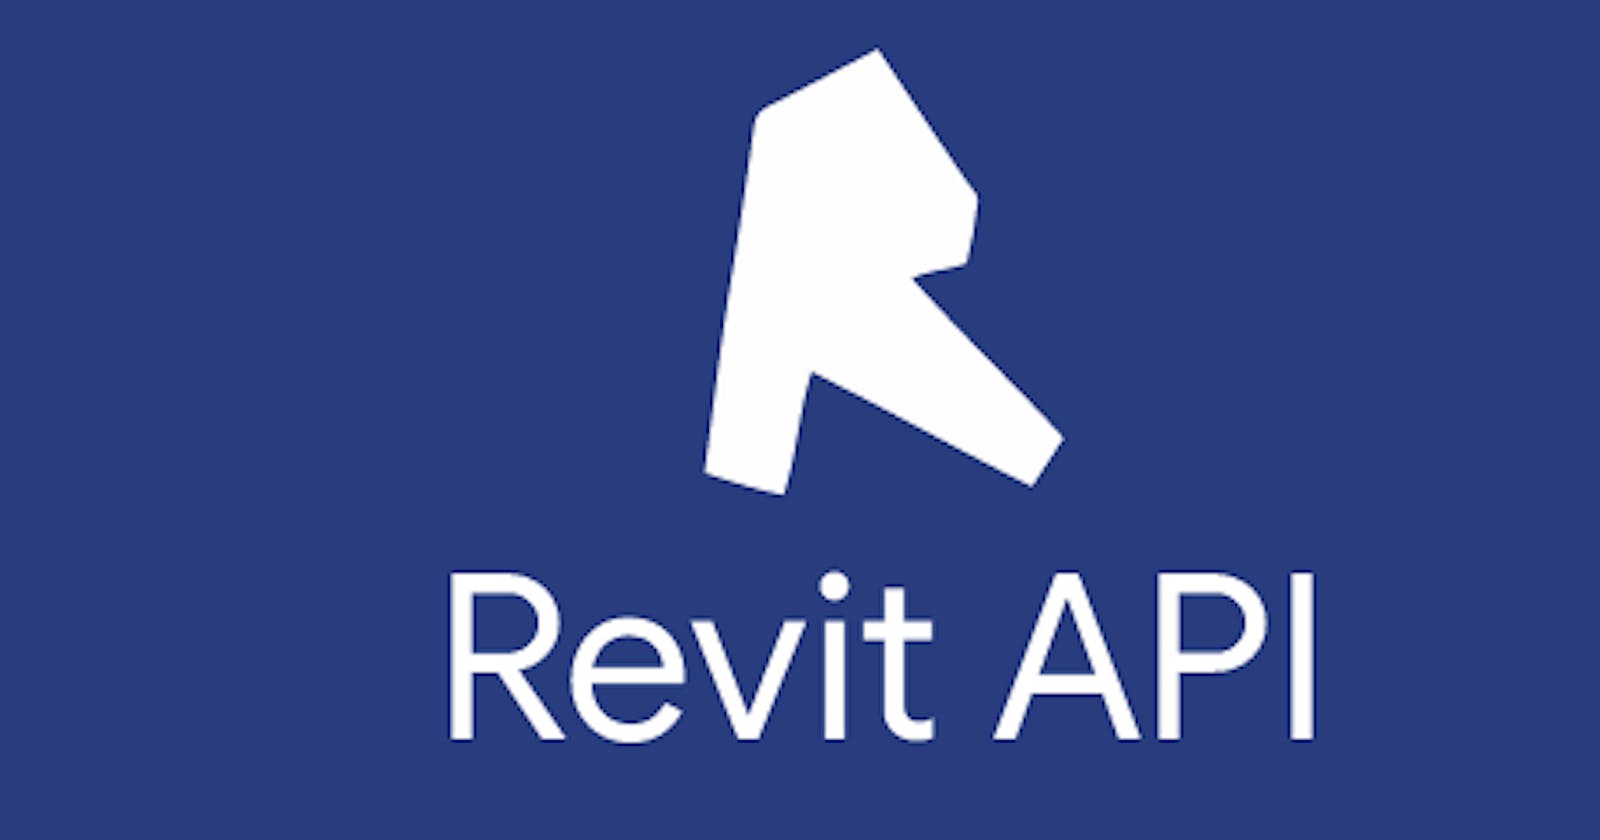 Setting up Revit API  Development Environment in vs code .